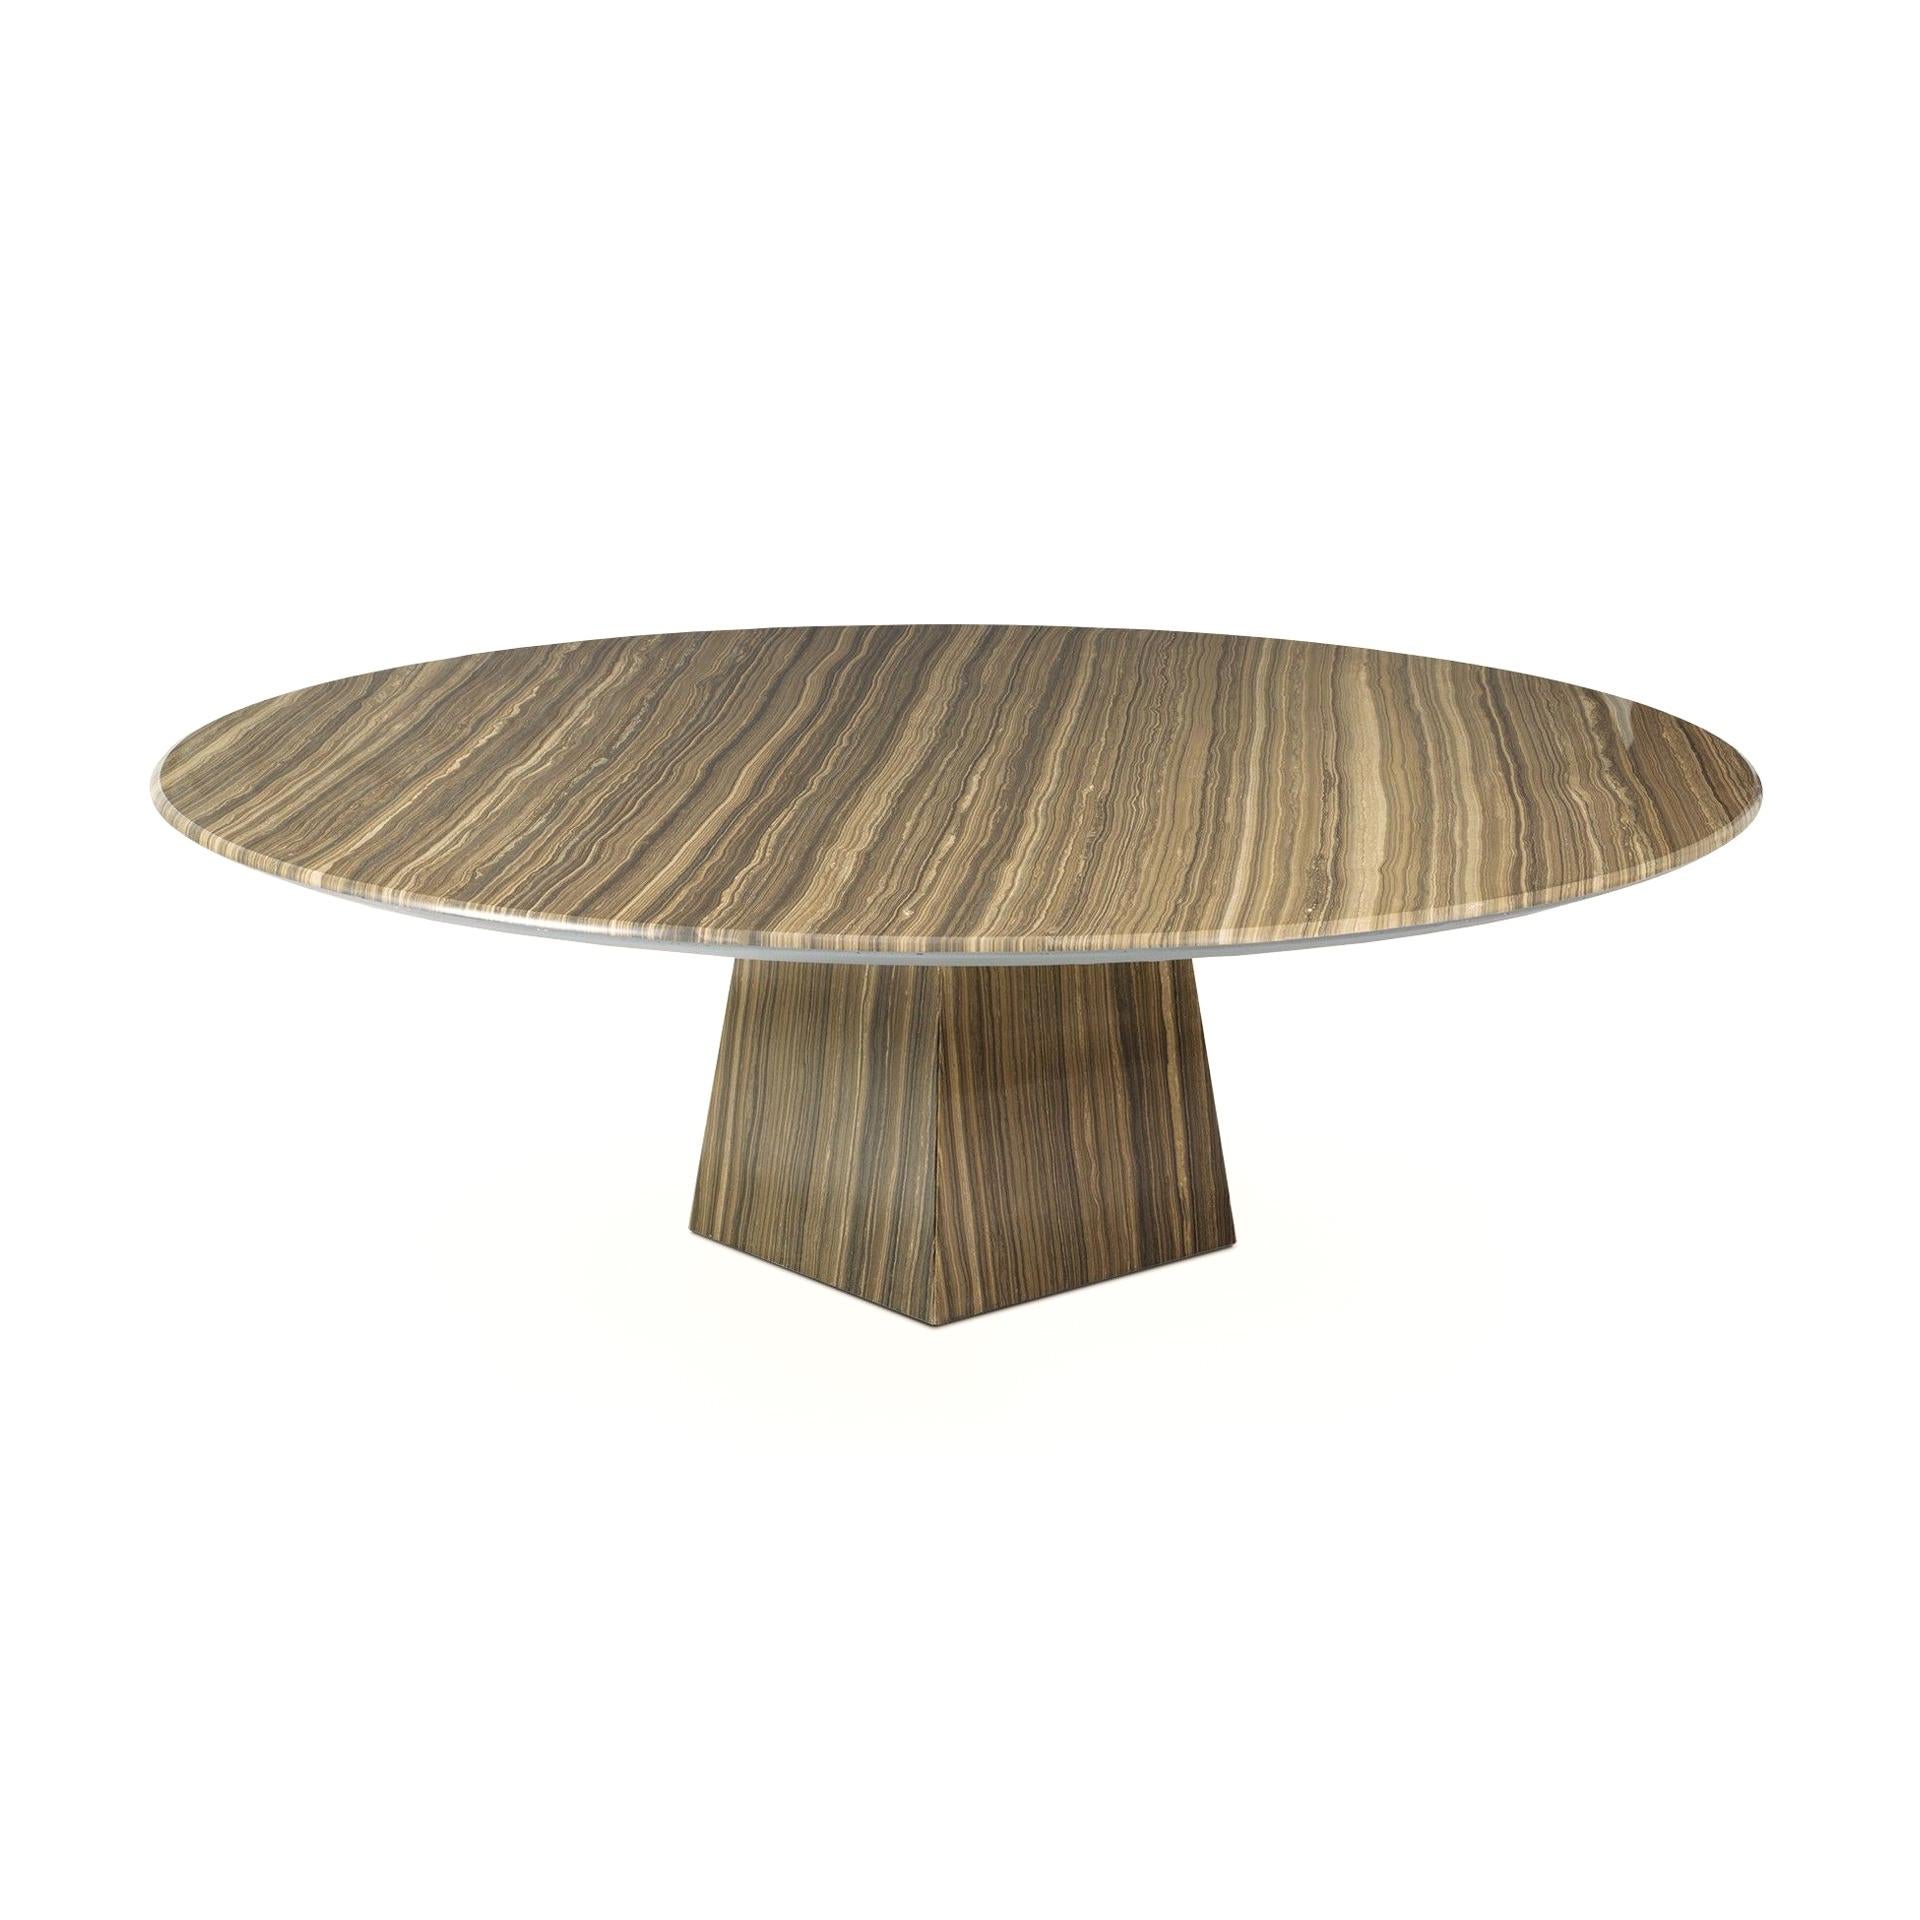 Fait main Table basse ronde en marbre brun ultra-mince en vente